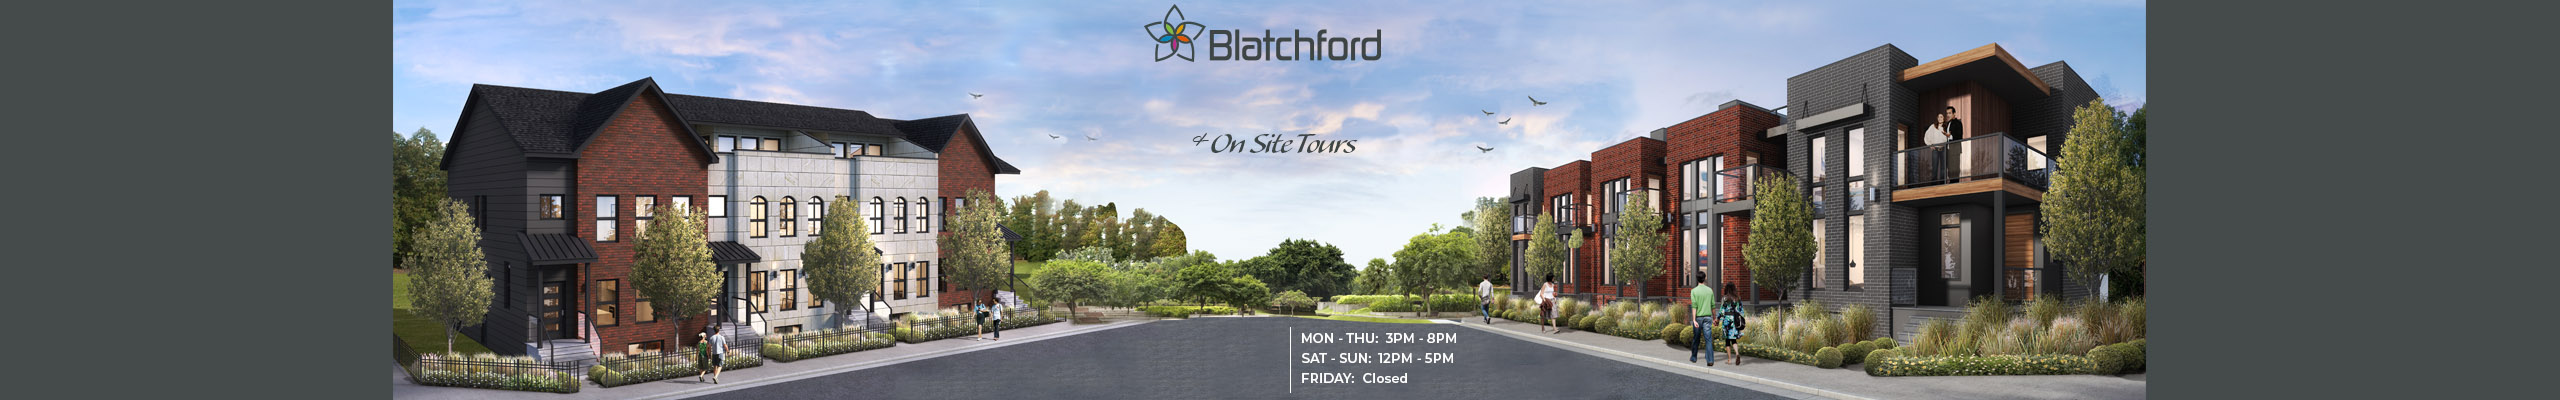 Blatchford - Sales Centre Now Open